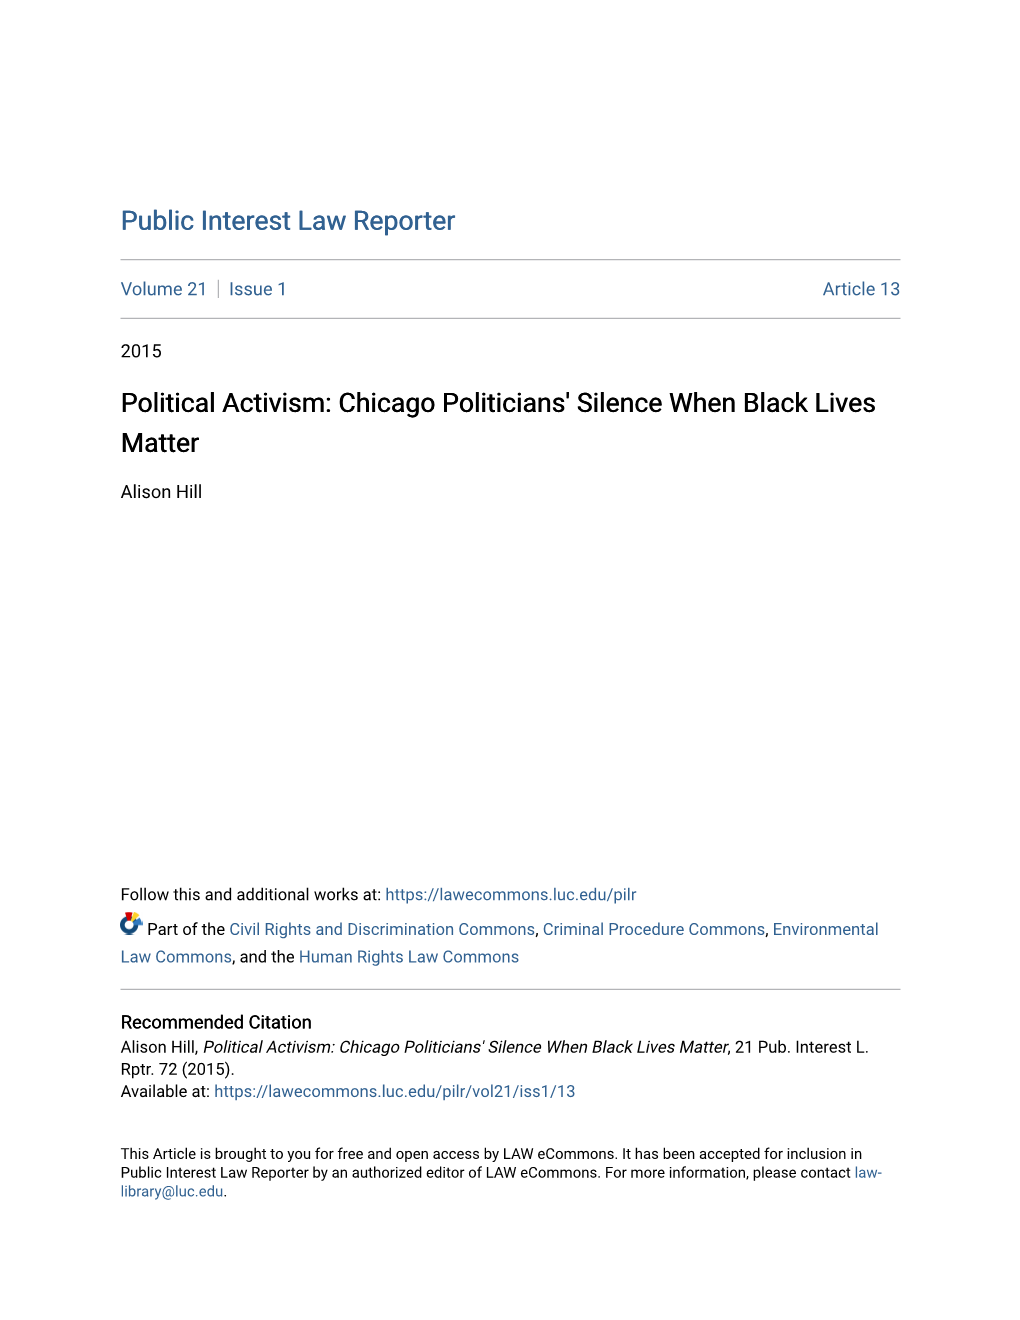 Political Activism: Chicago Politicians' Silence When Black Lives Matter